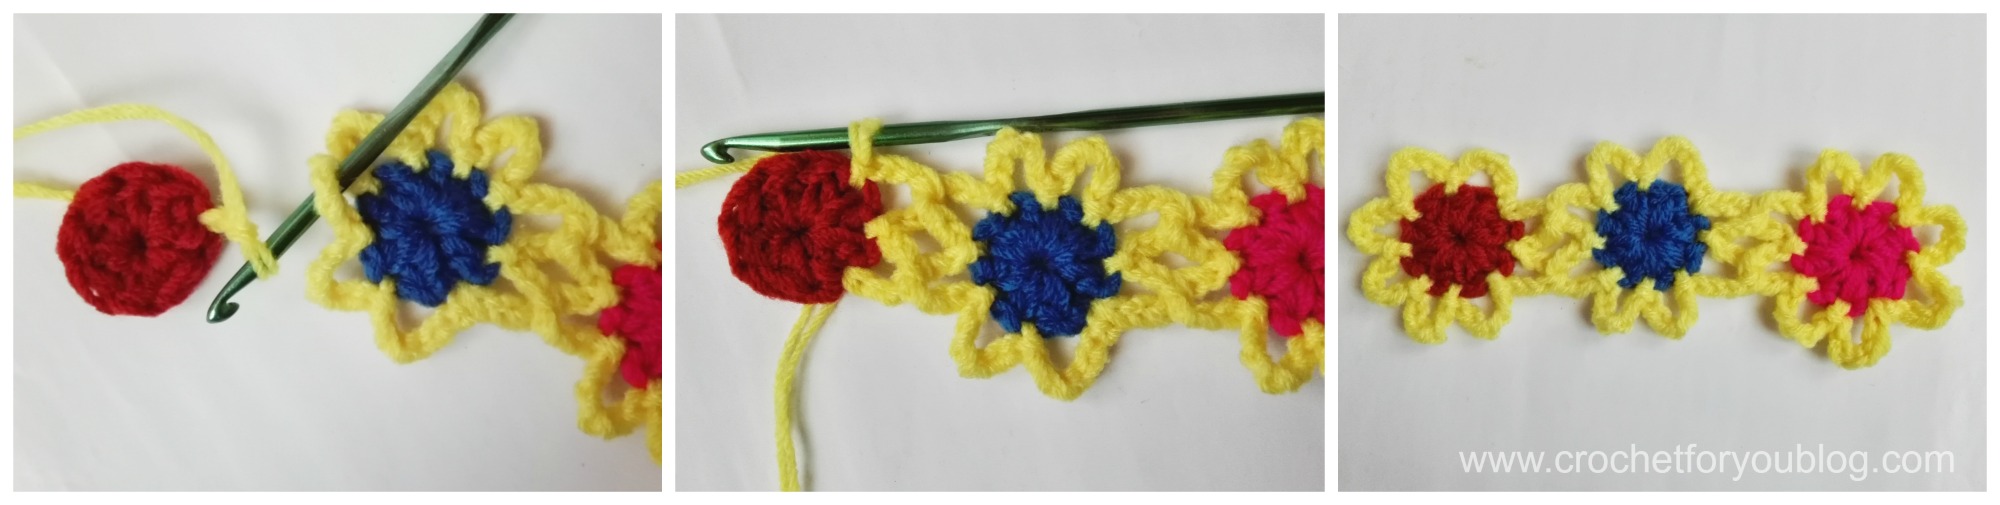 Crochet Star Flower Headband - free pattern